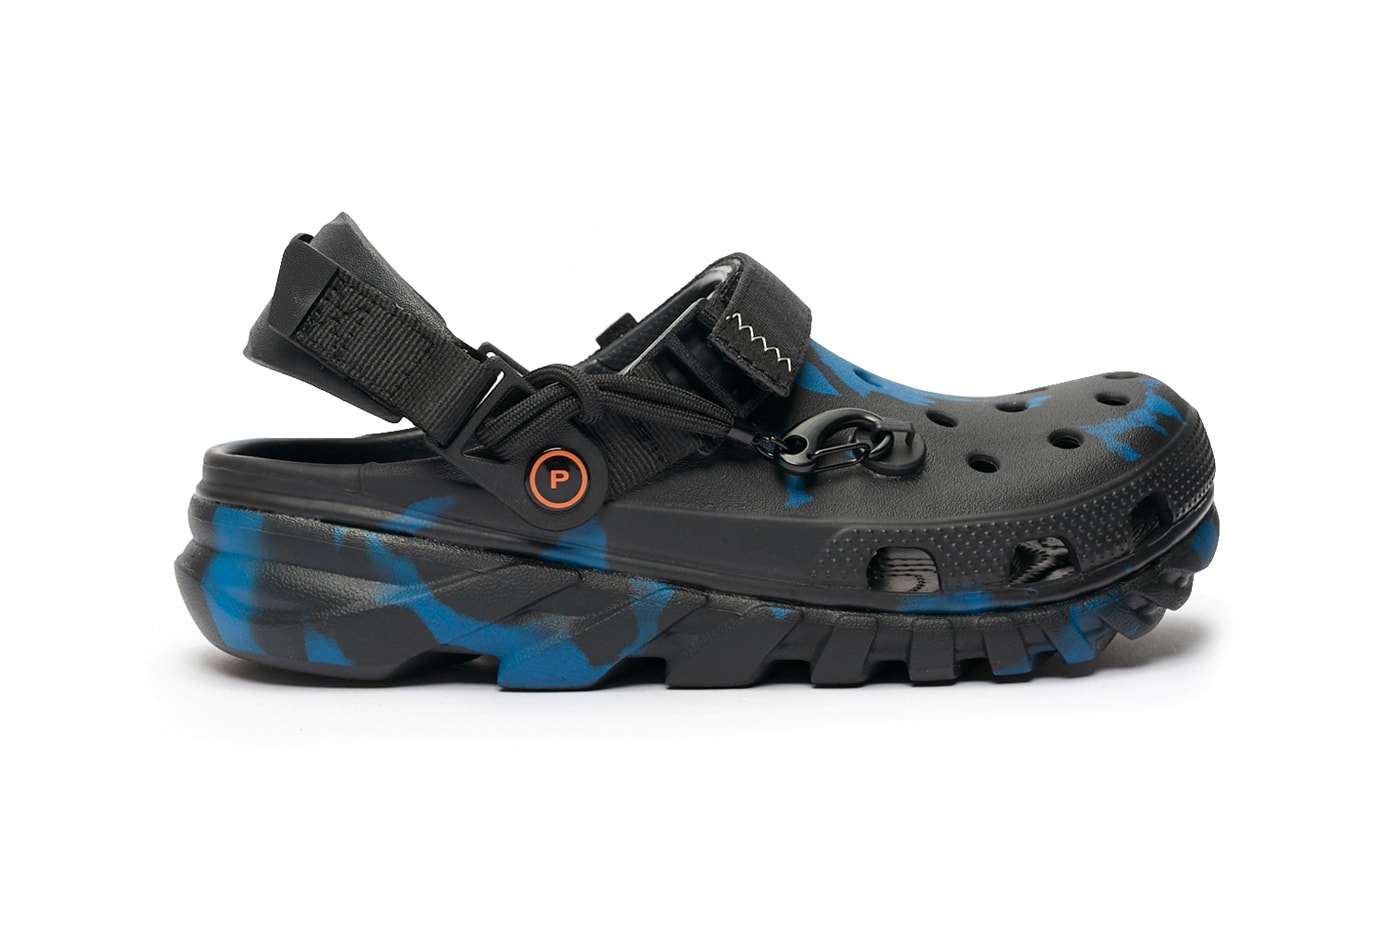 Post Malone x Crocs Duet Max Clog Release  Crocs footwear Posty Camo Clogs Foam comfort 